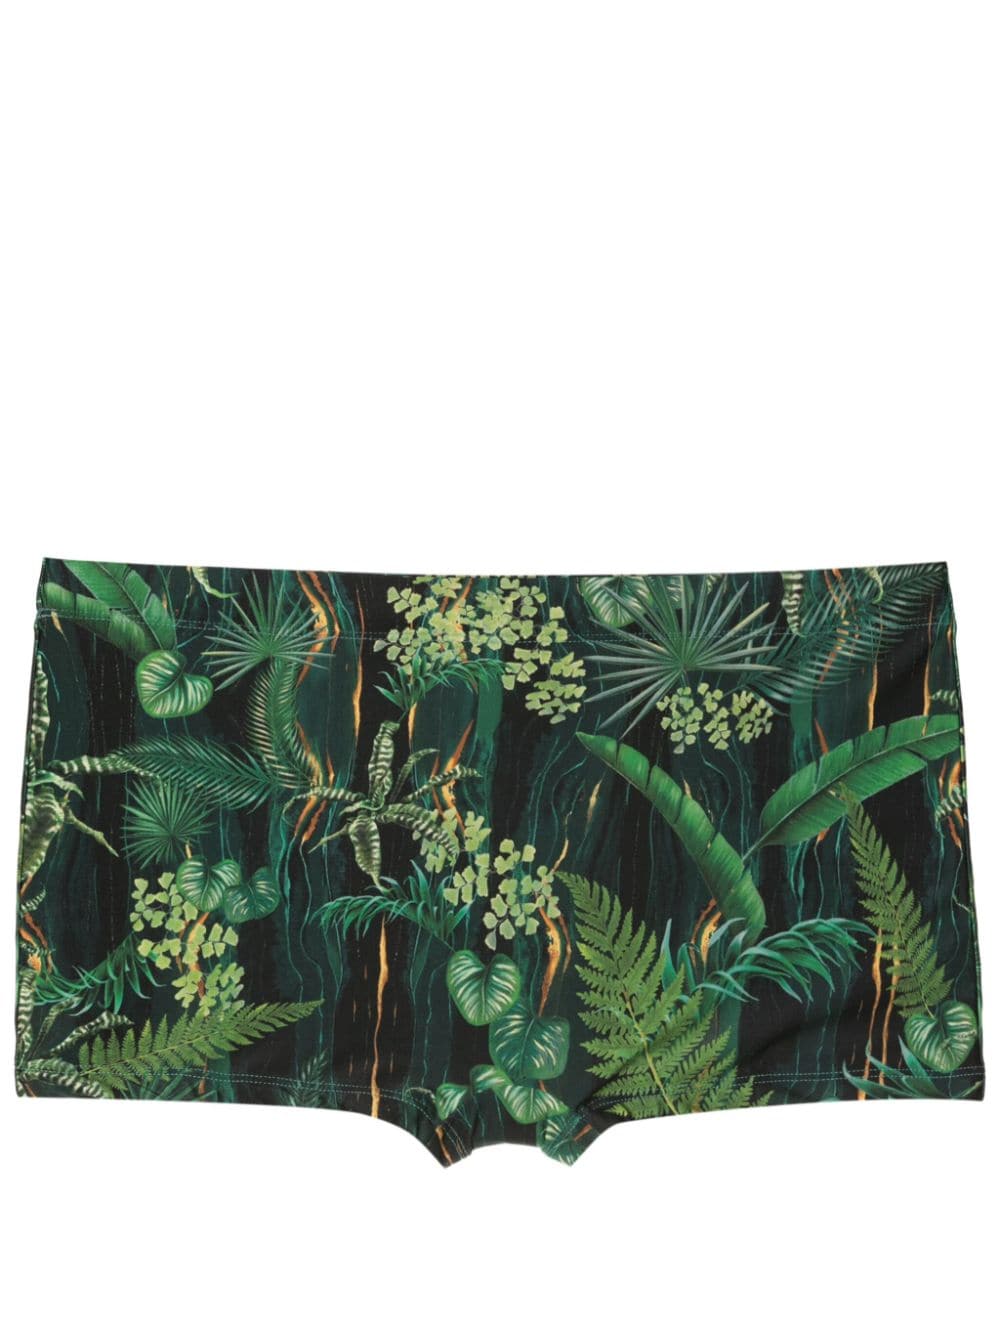 Lygia & Nanny Tijuca leaf-print swimming trunks - Green von Lygia & Nanny